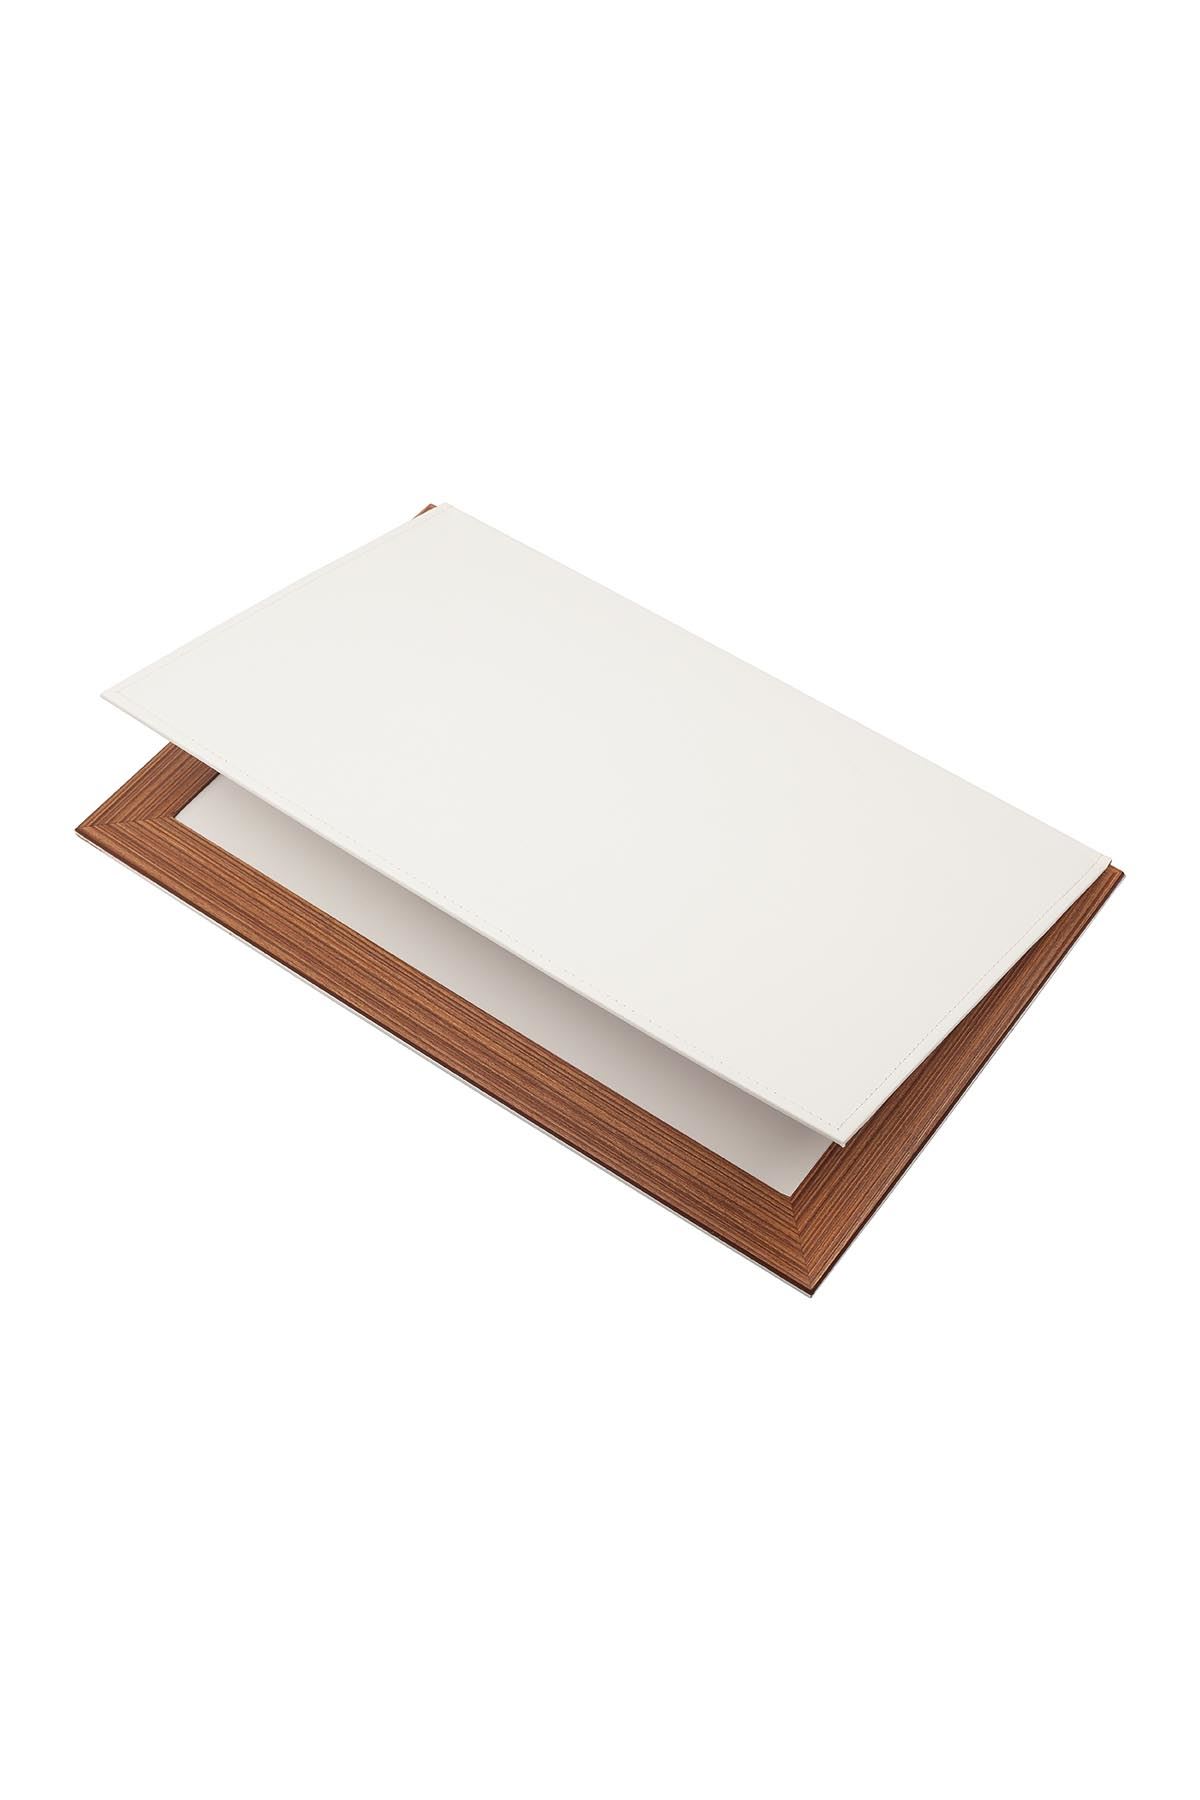 Star Lux Leather Desk Set White 11 Accessories